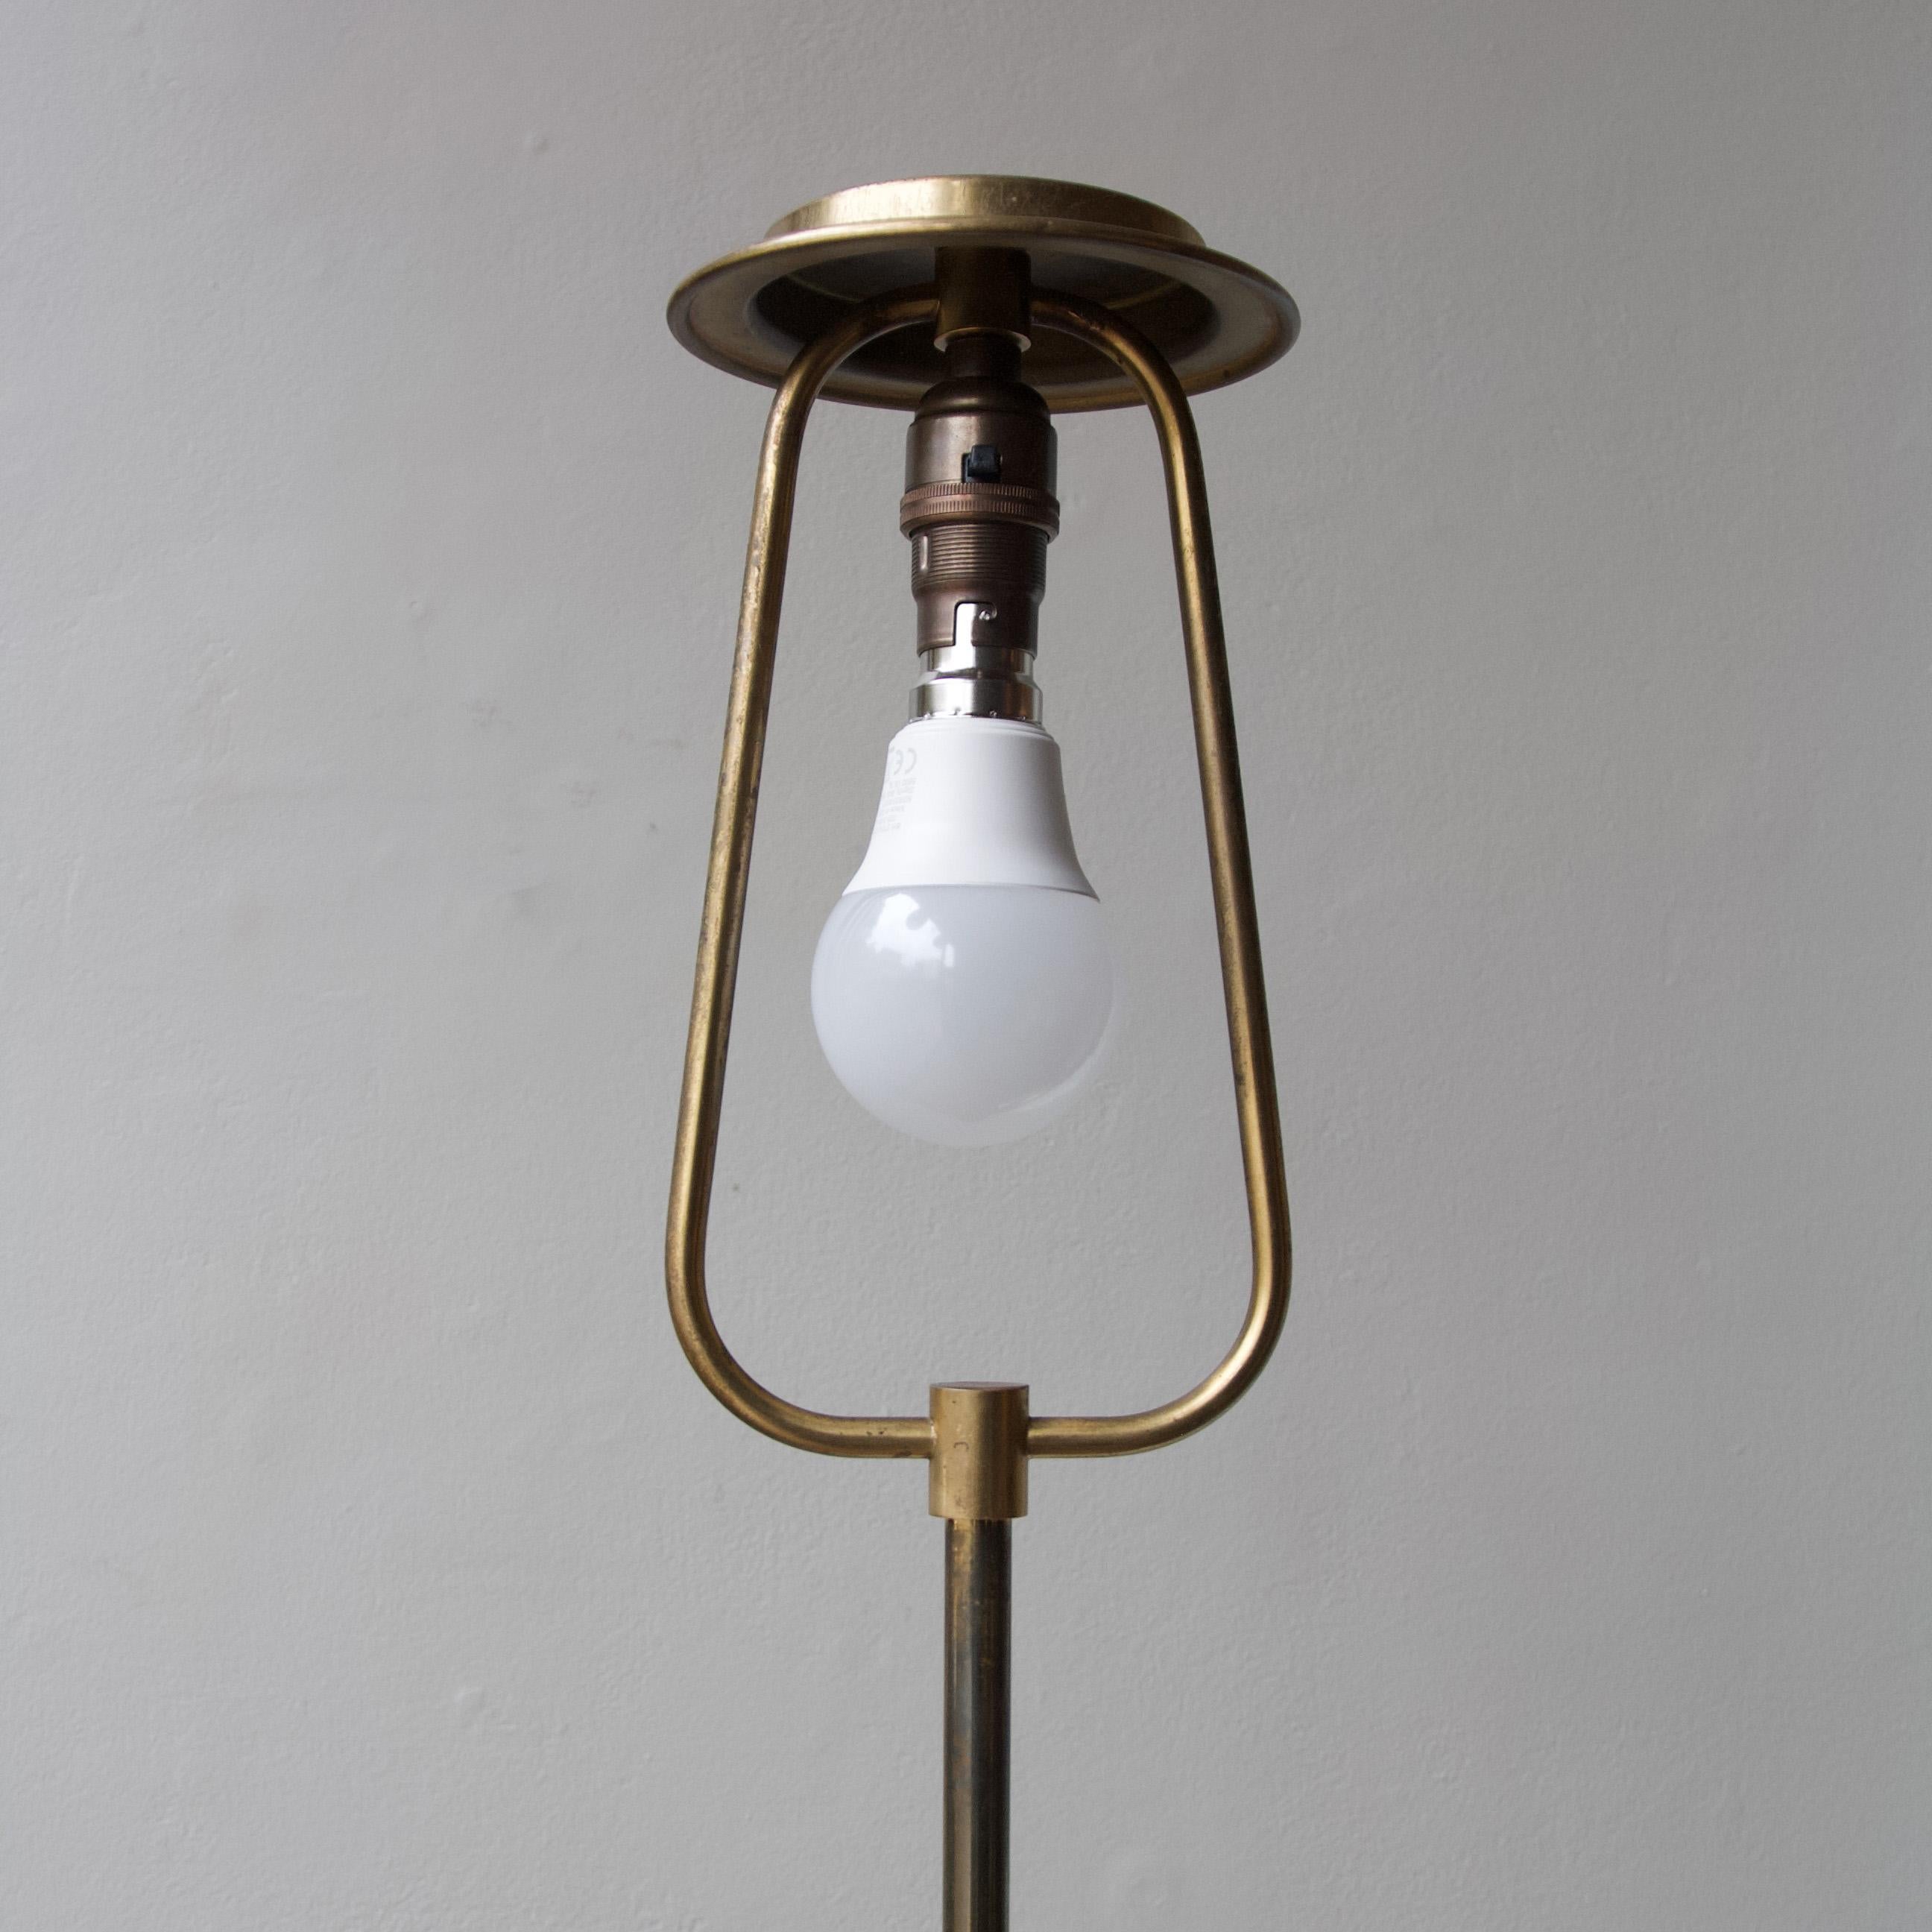 Telescopic Brass Floor Lamp, Danish, 1940s For Sale 3